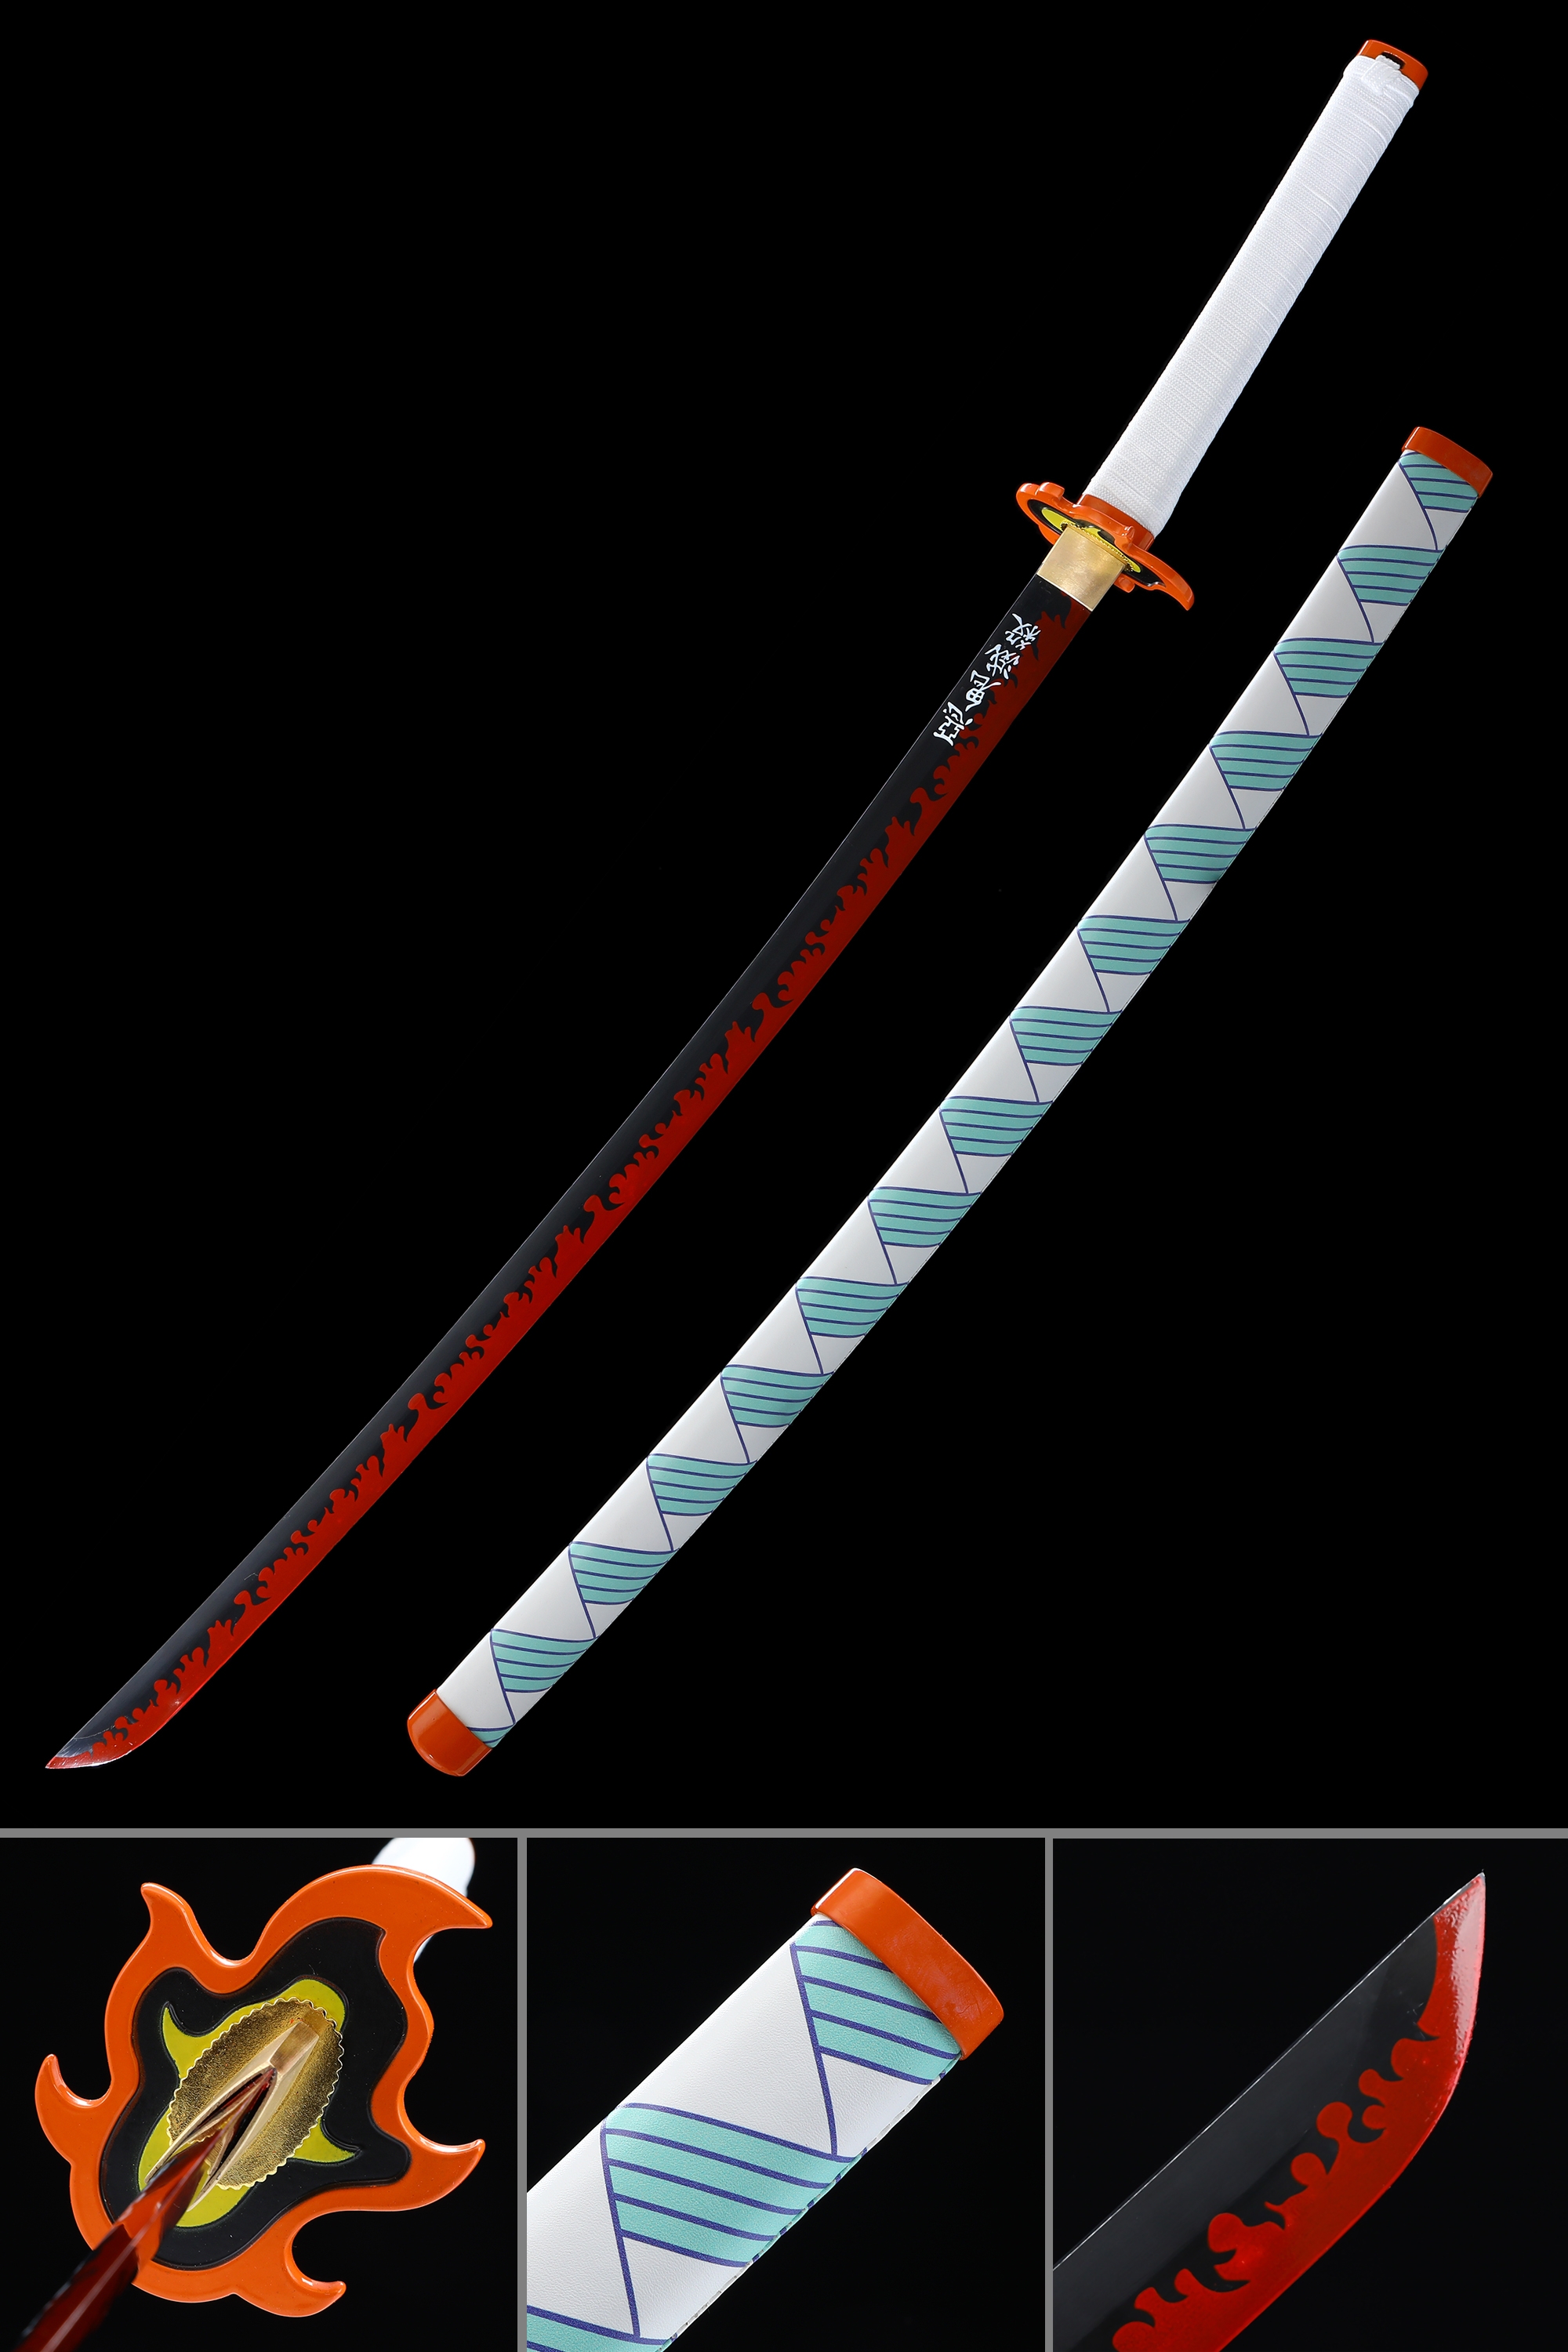 New Pipe and Rengoku Sword Reworks!